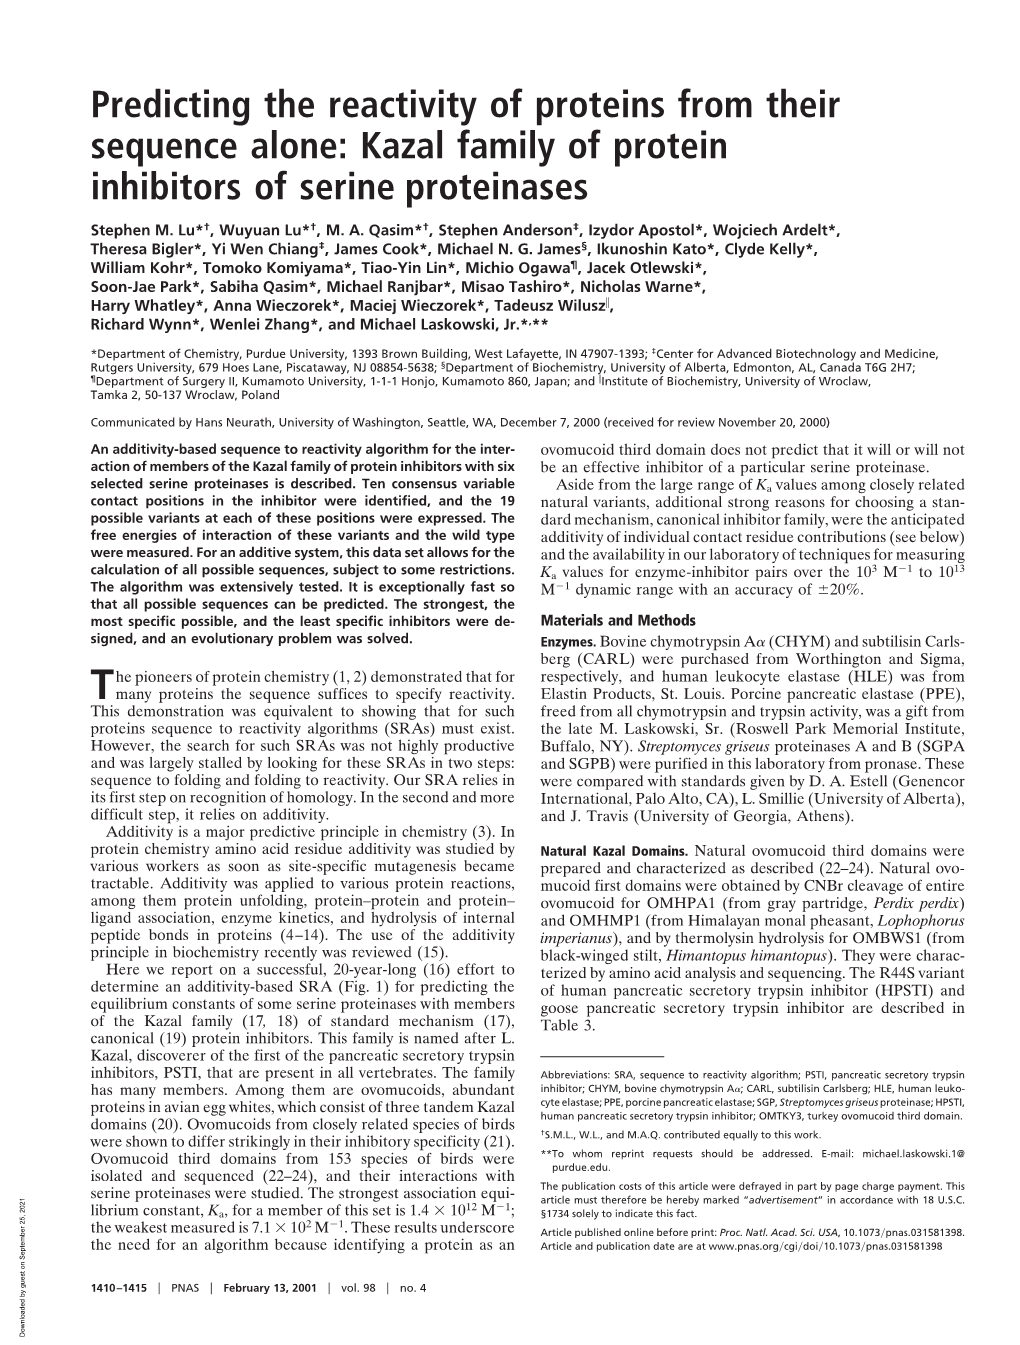 Kazal Family of Protein Inhibitors of Serine Proteinases